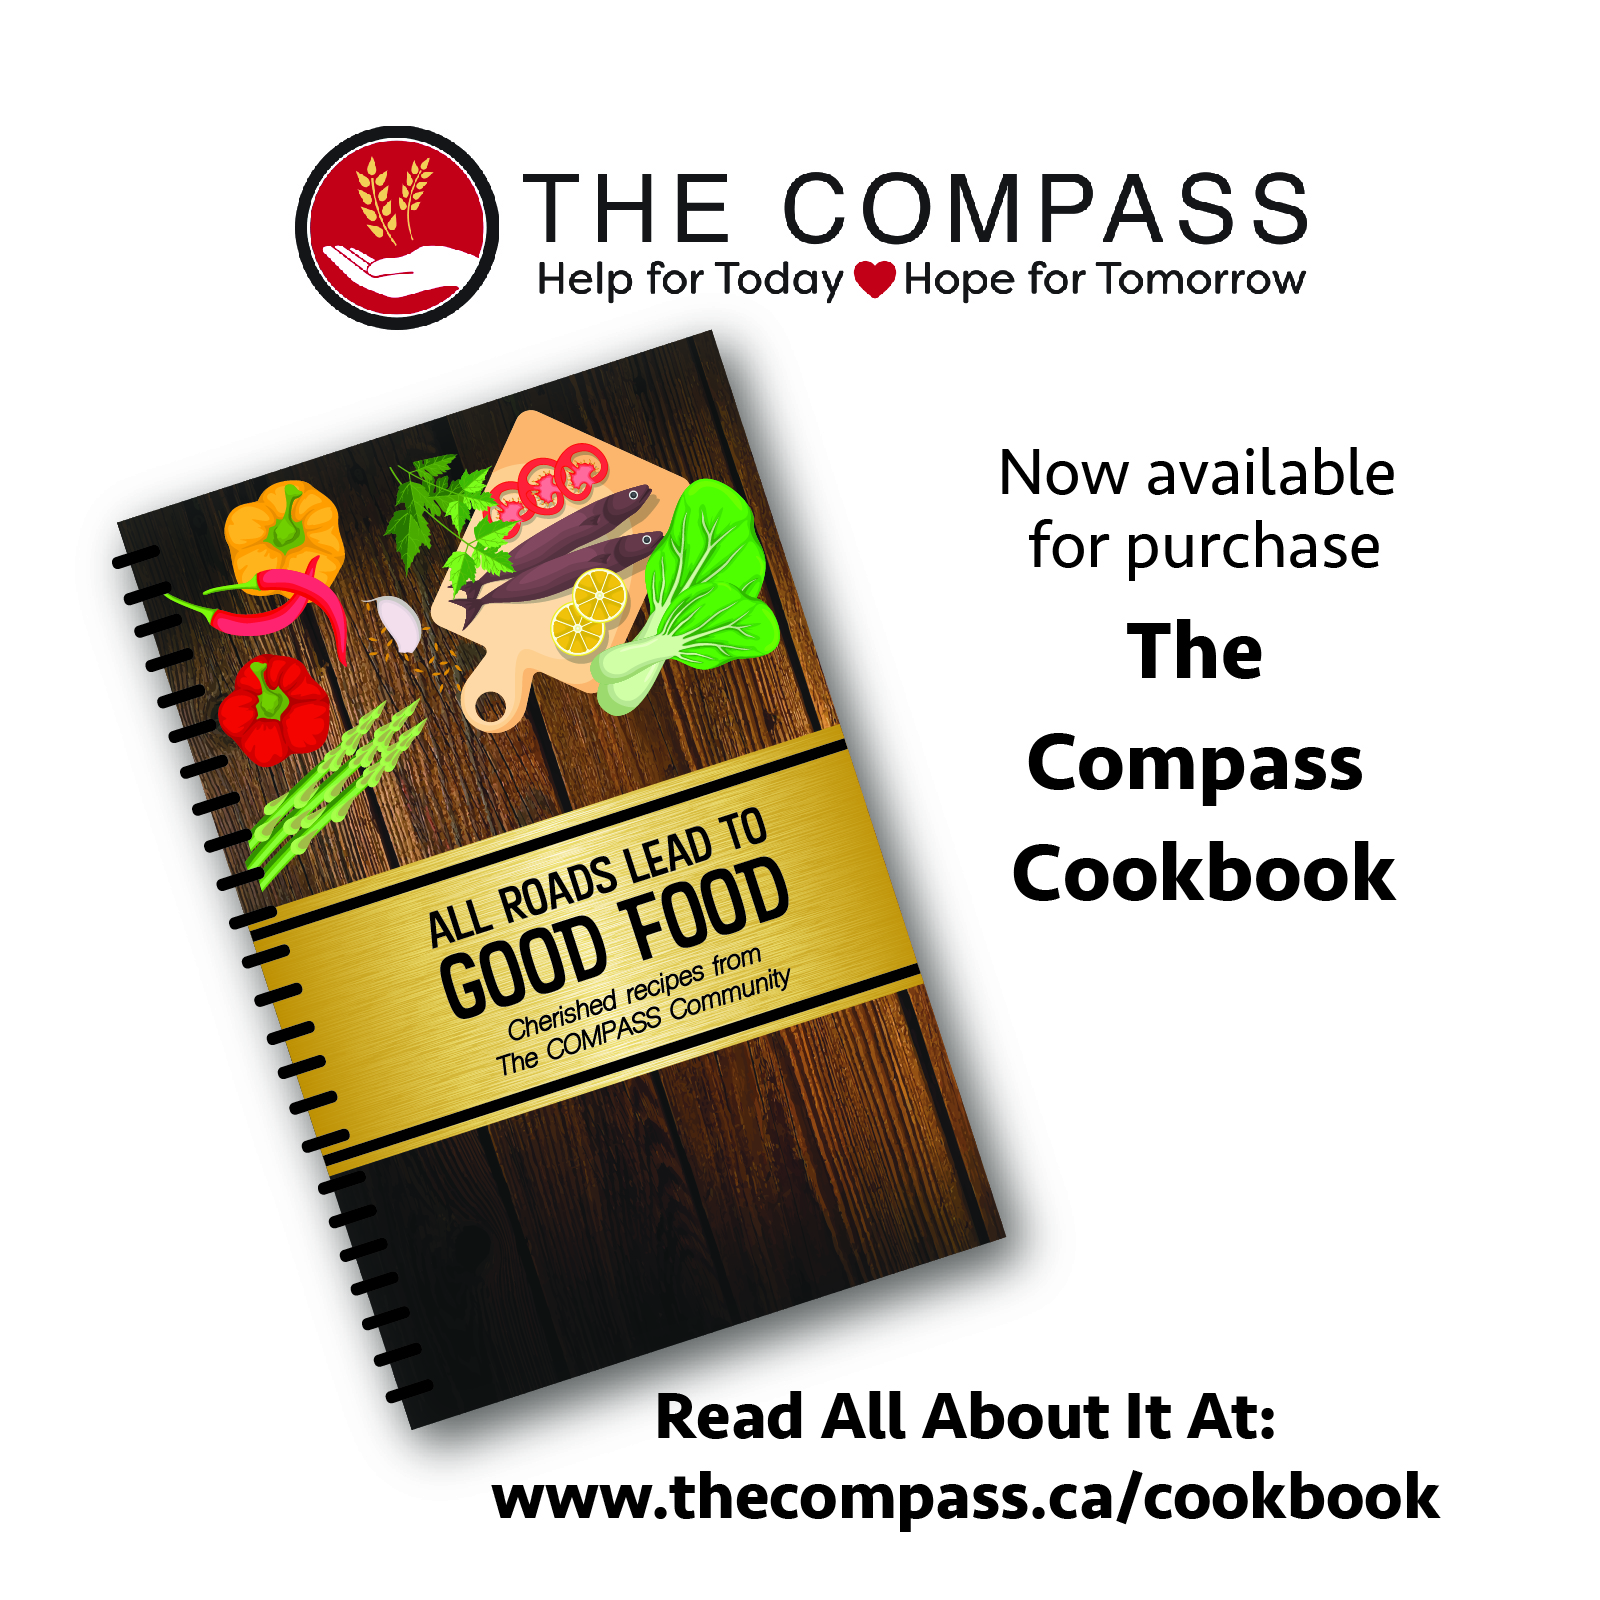 The Compass Cookbook Flyer